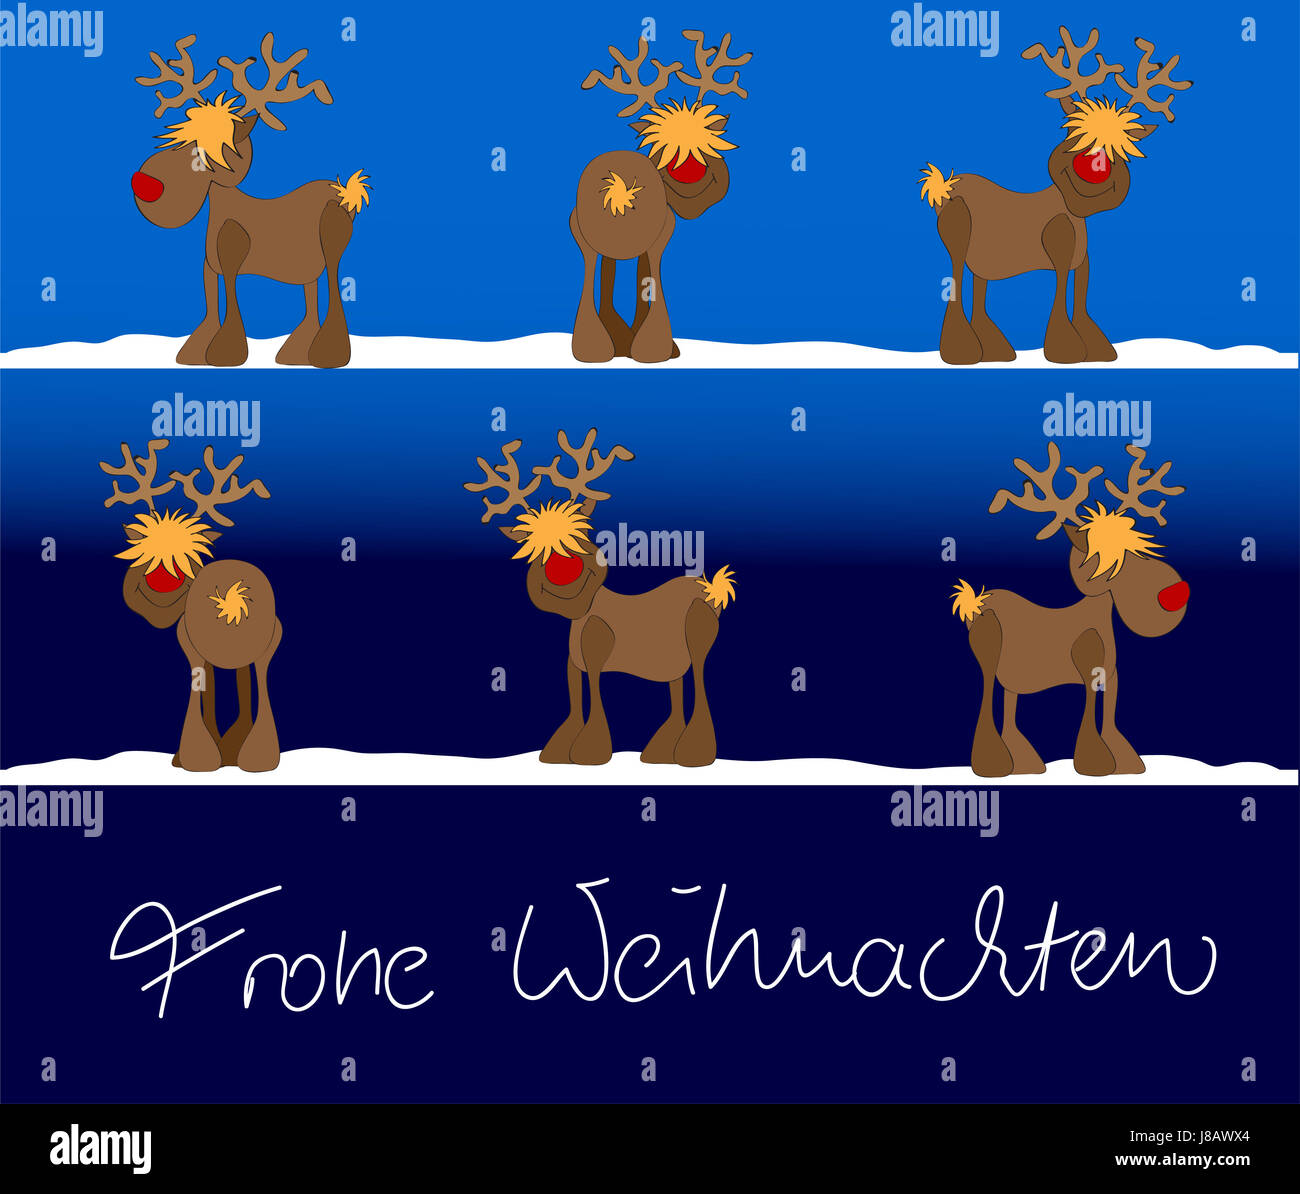 Merry Christmas card Stockfoto